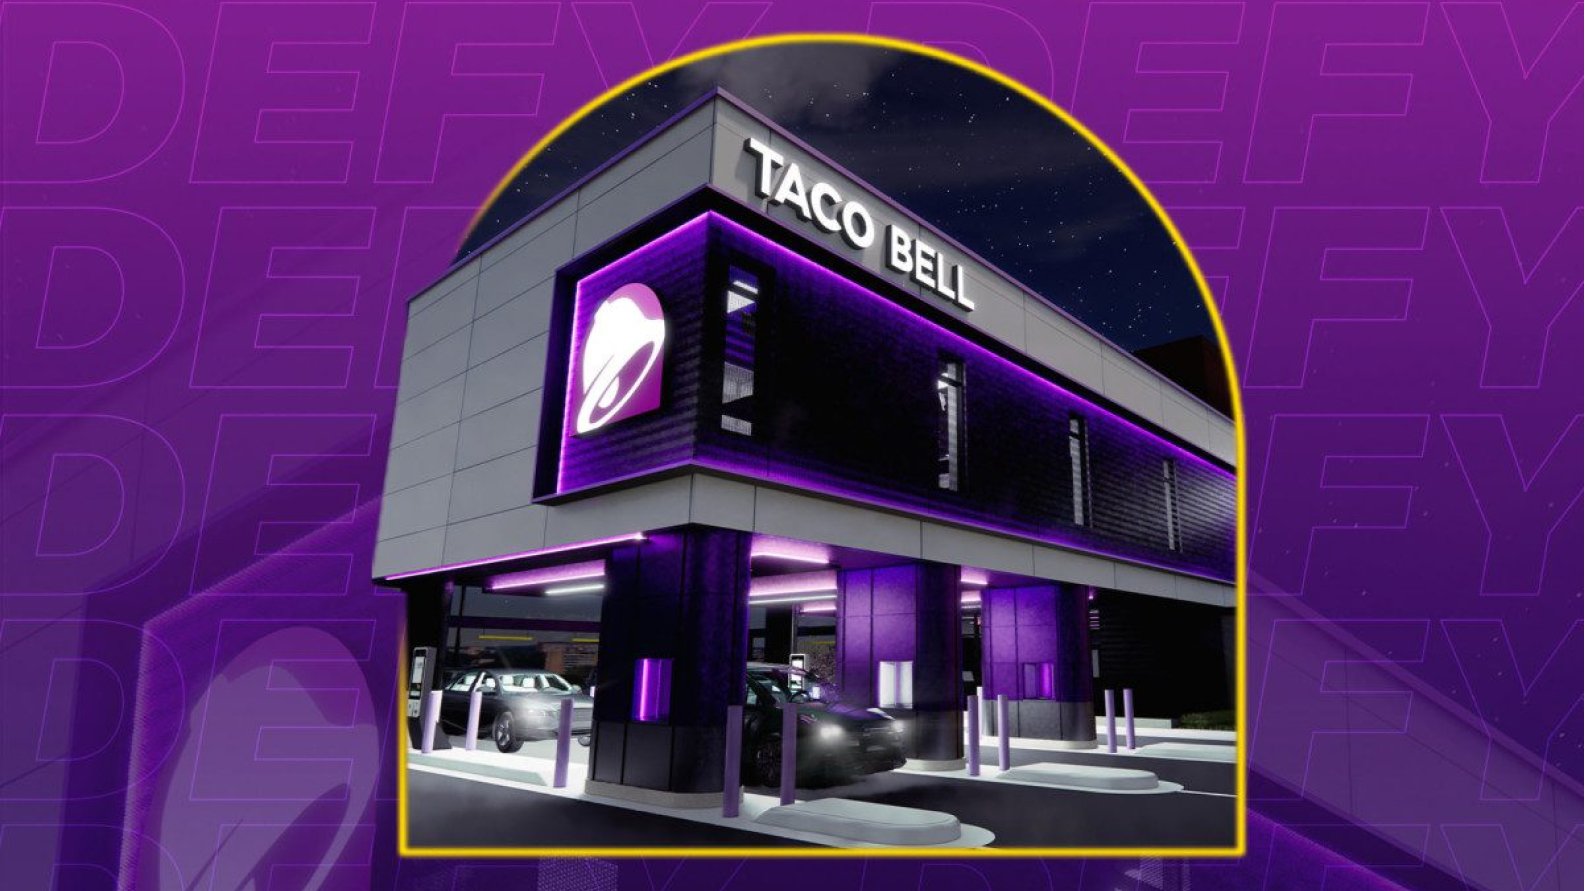 Taco Bells Defy drive-thru concept with four drive-thru lanes